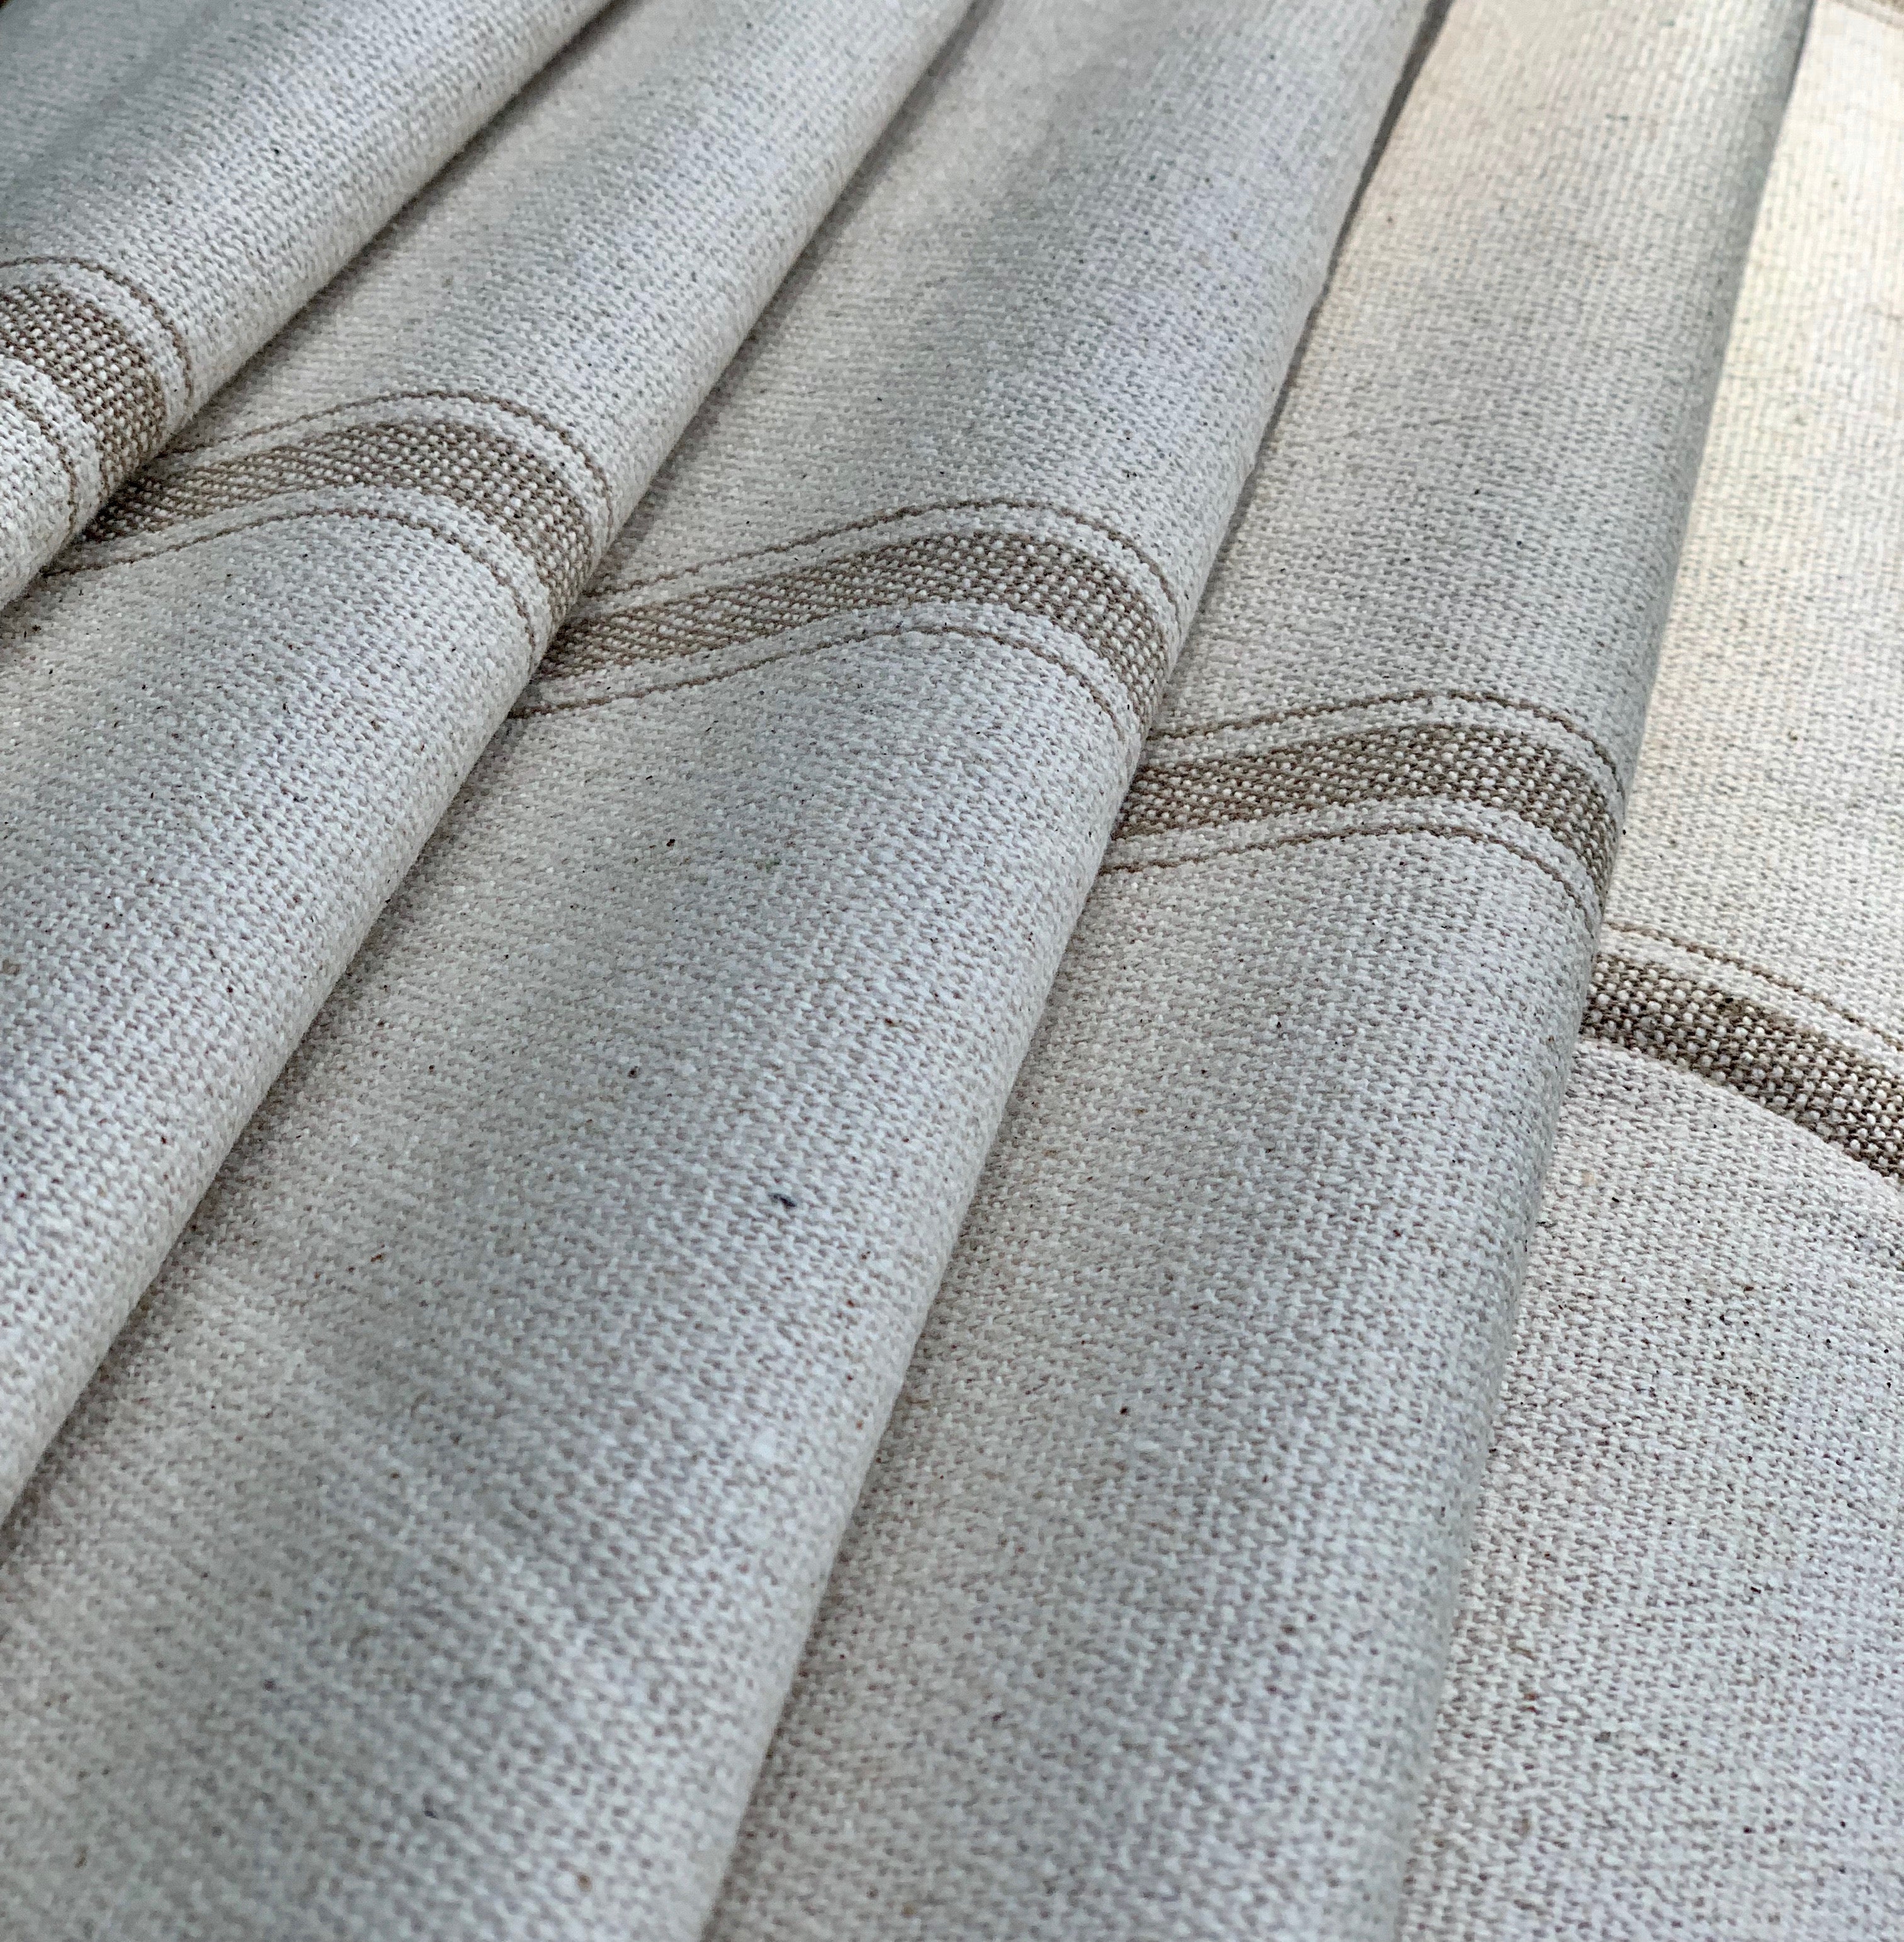 Grain Sack Fabric - Tan Stripes on Cream